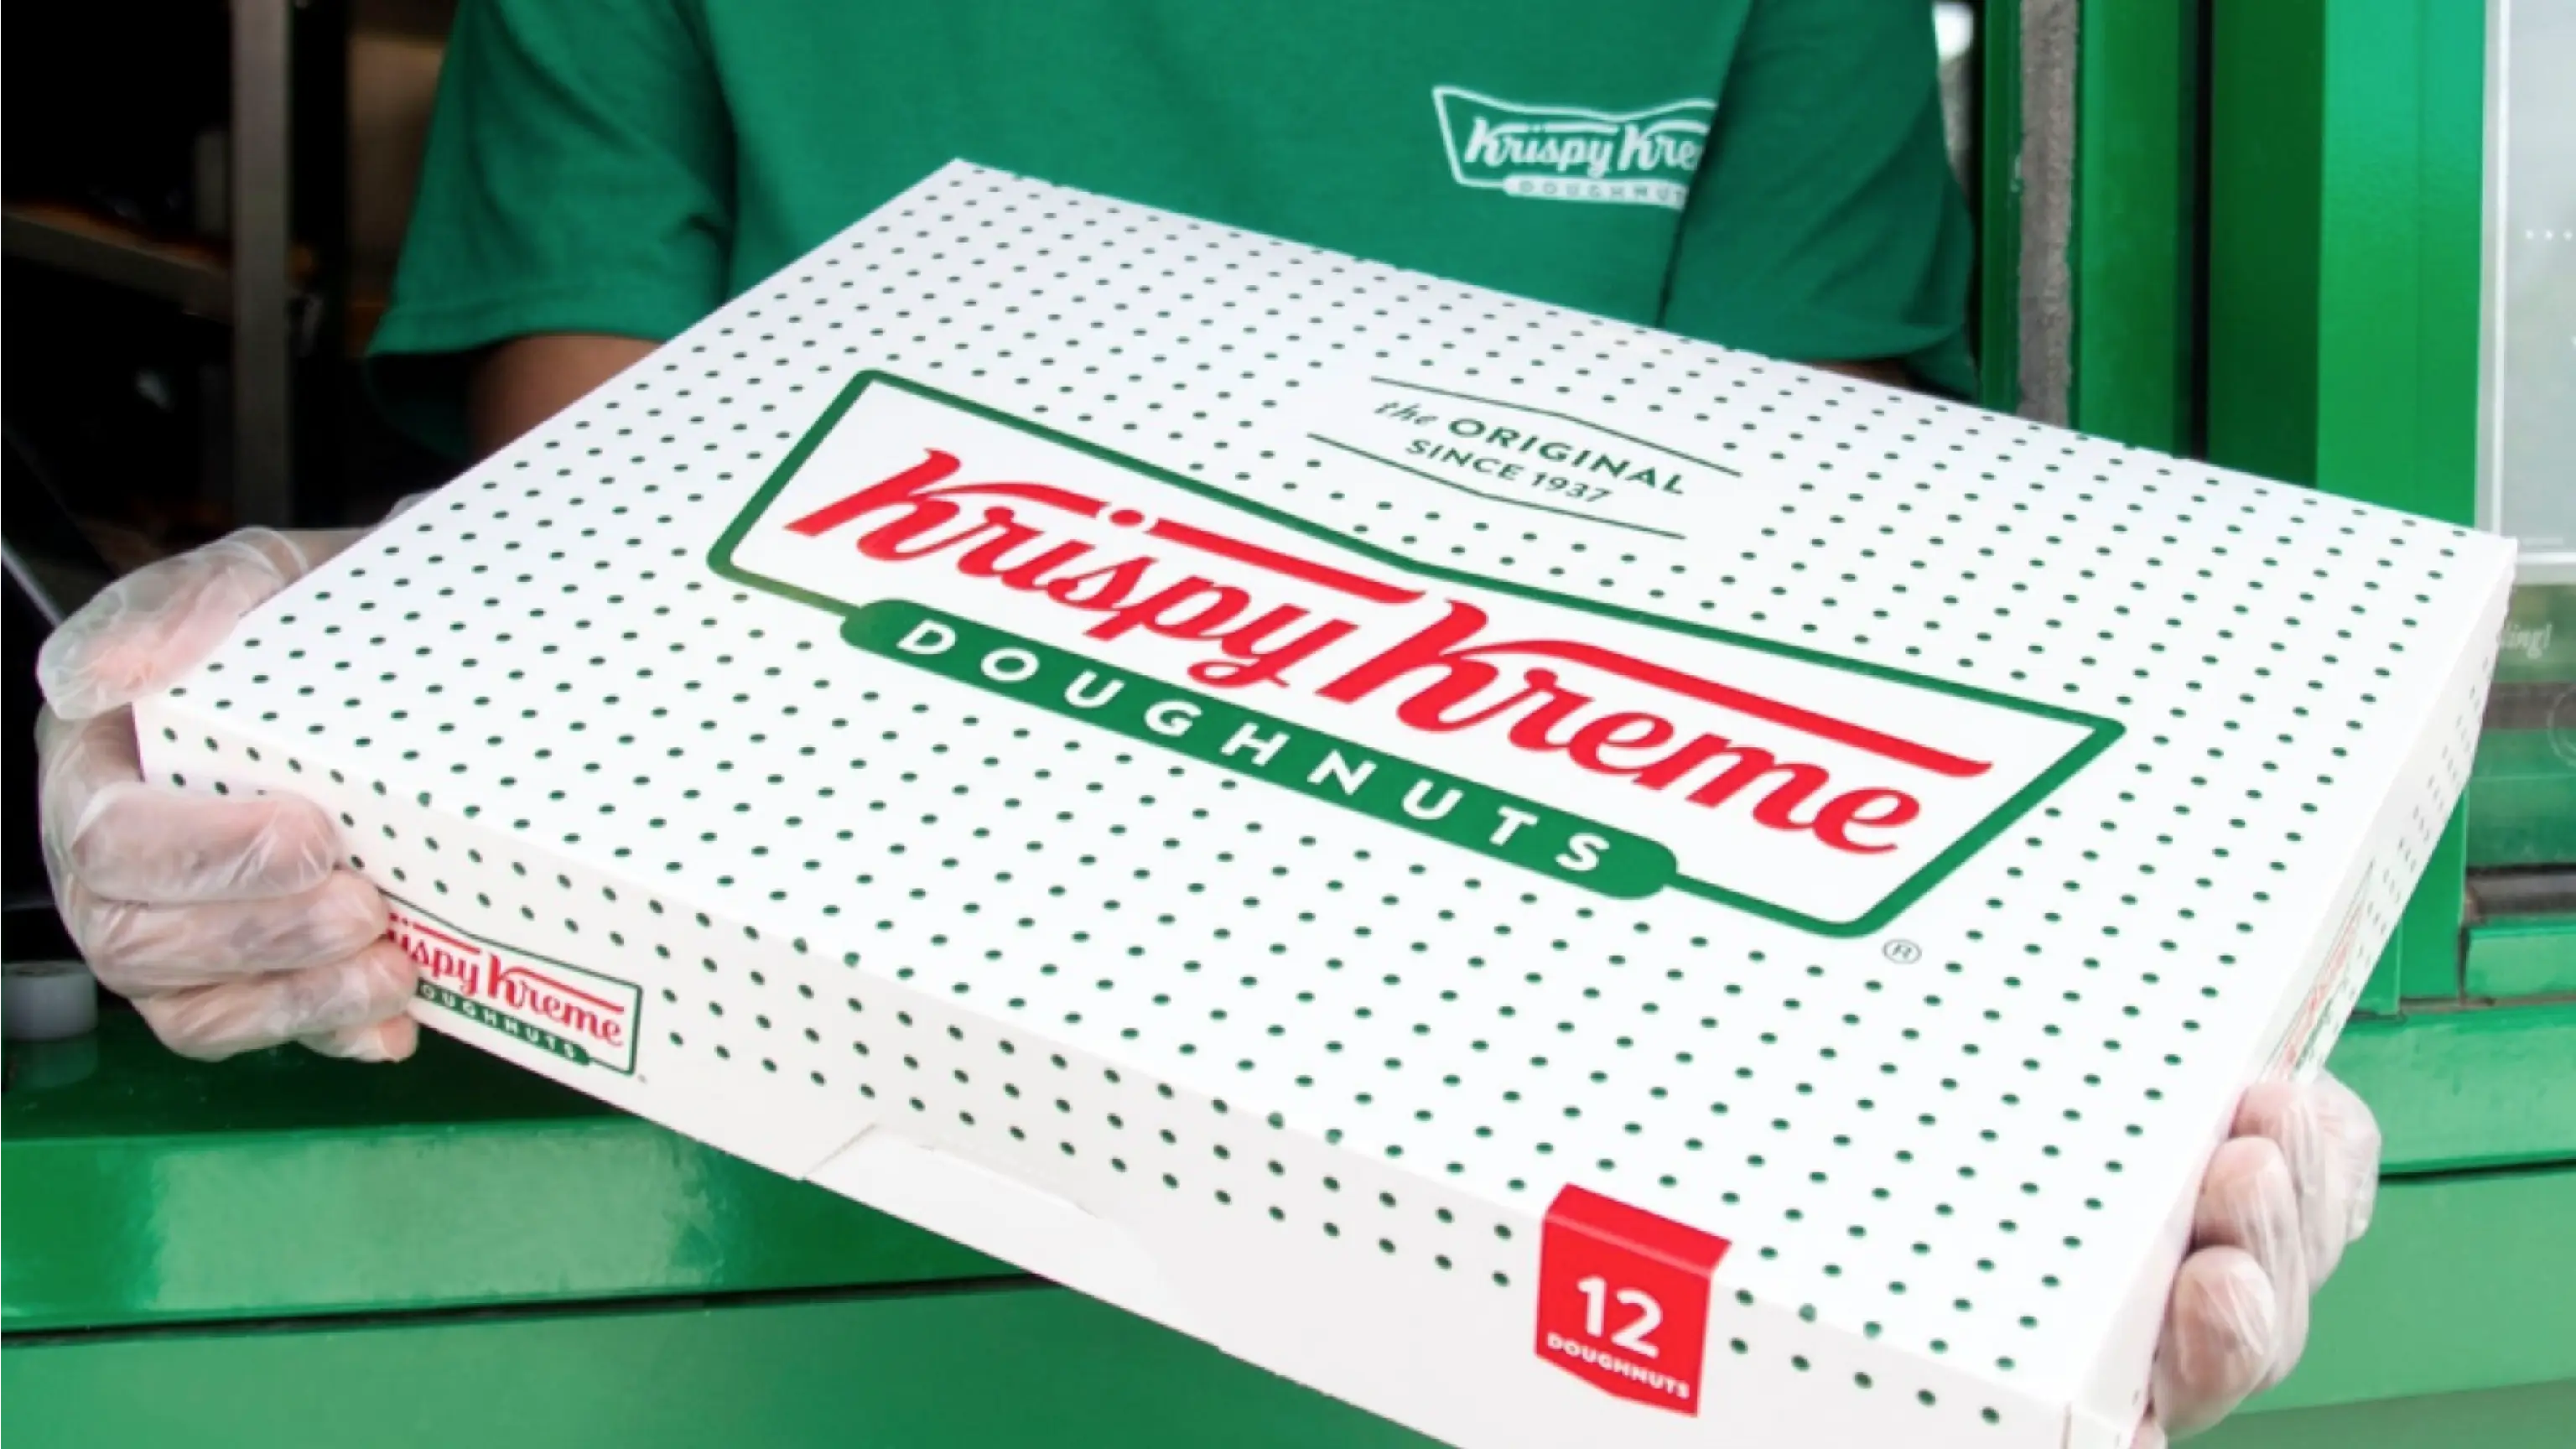 Krispy Kreme drive-thru employee handing box of dozer doughnuts to customer.